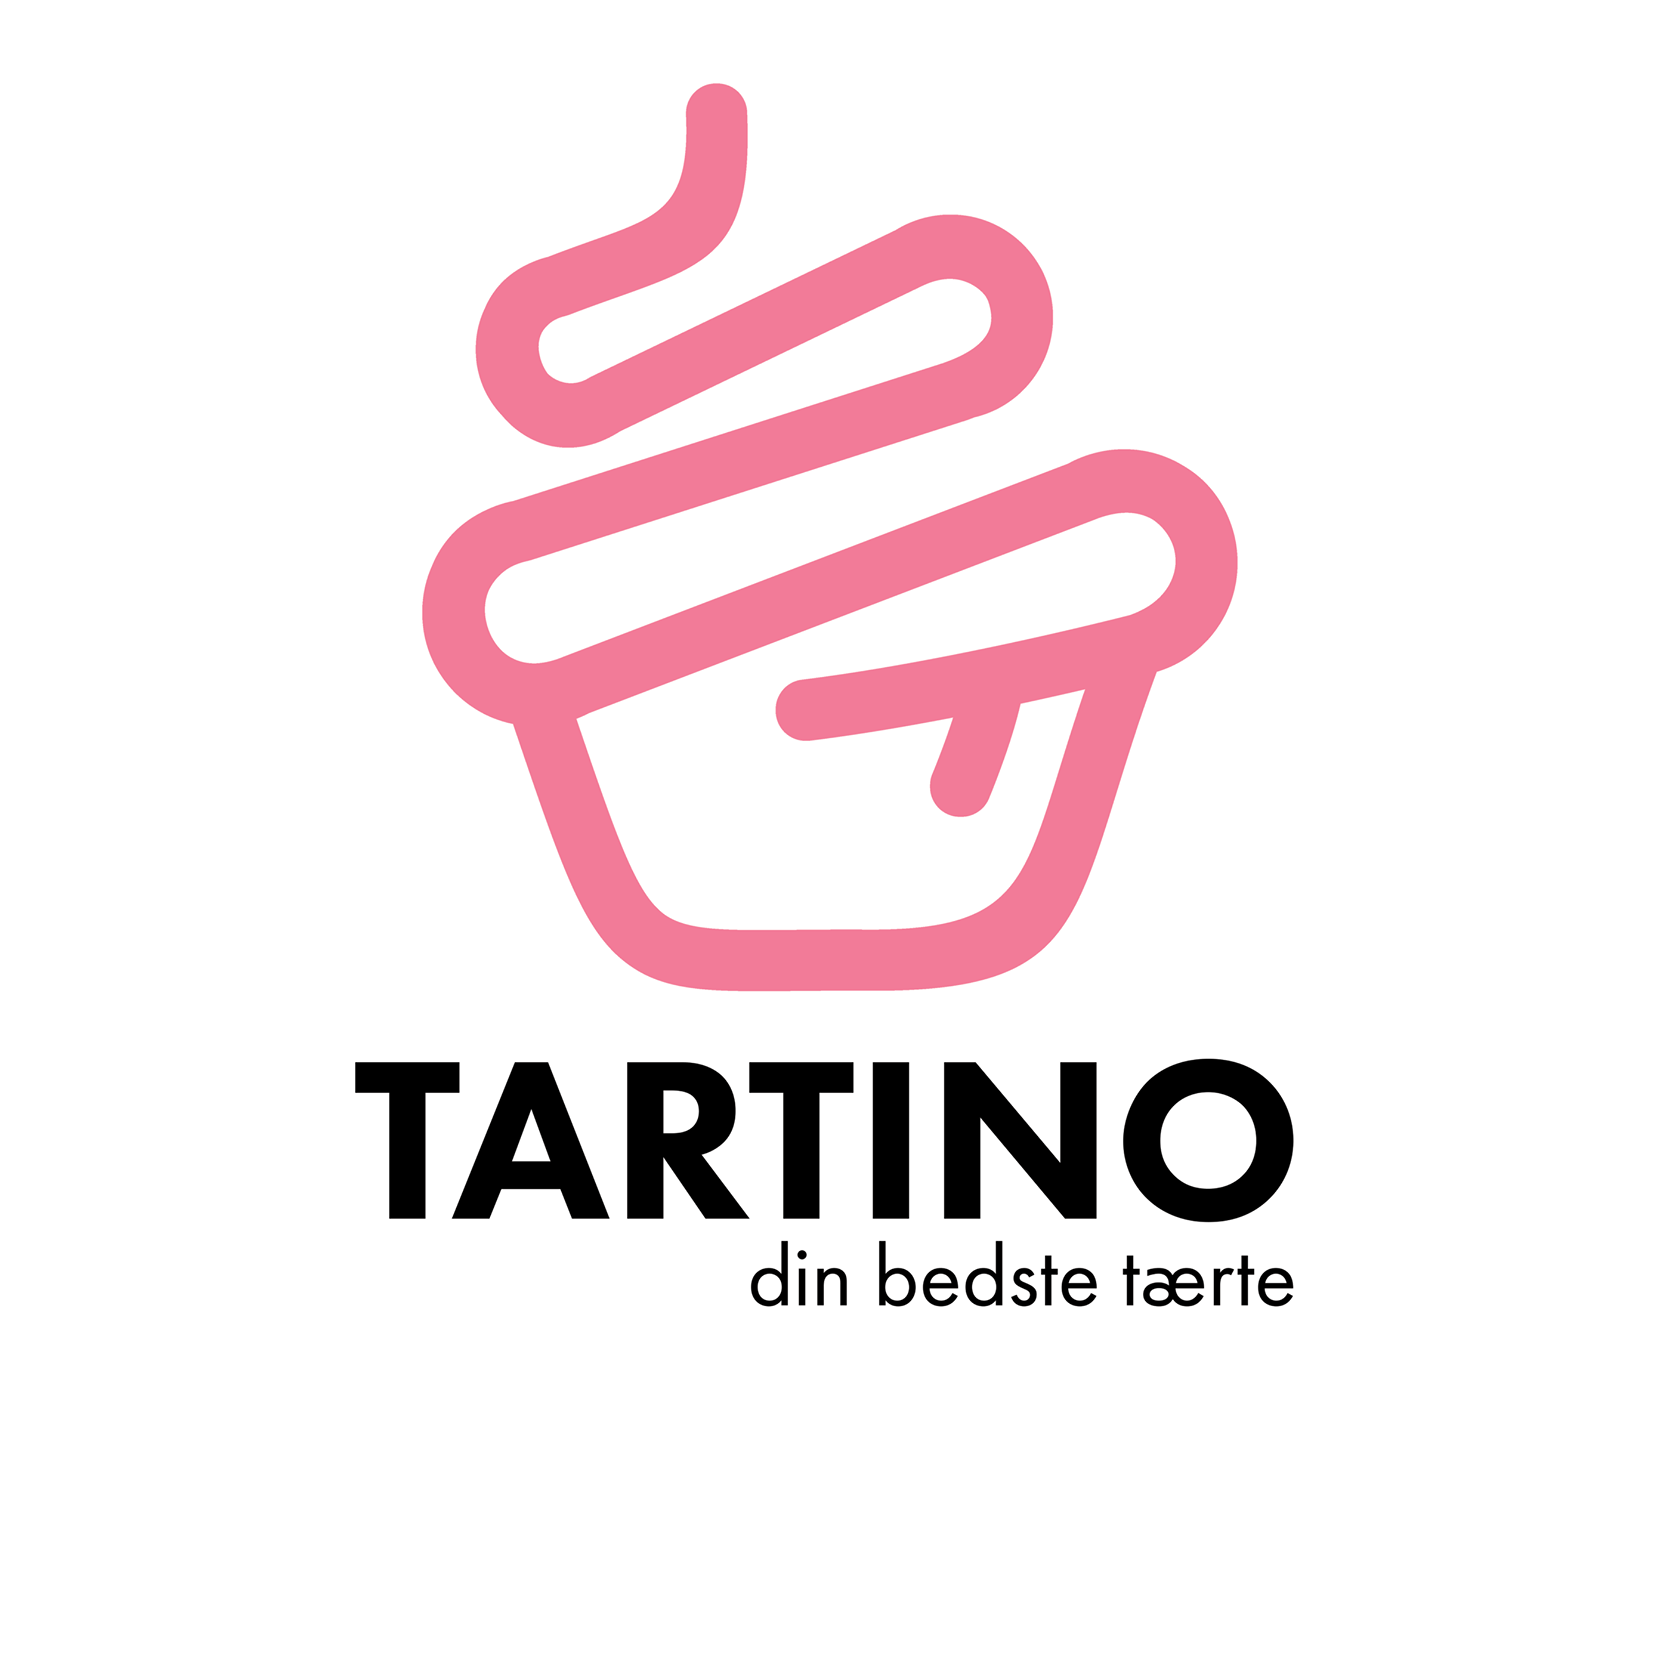 Tartino.dk